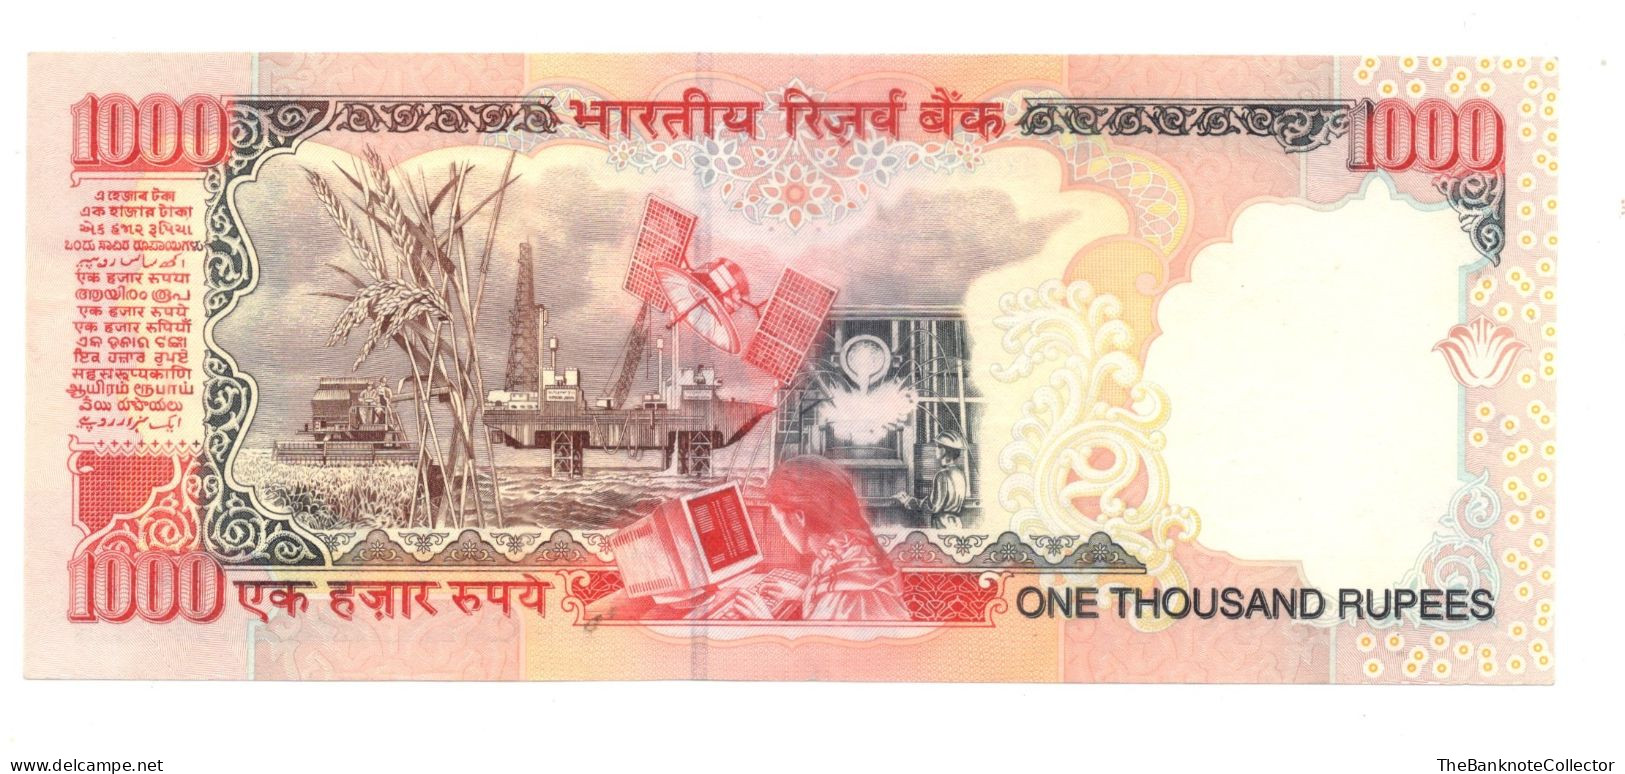 INDIA 1000 Rupees ND2000  P-94 UNC NO Pinholes - India